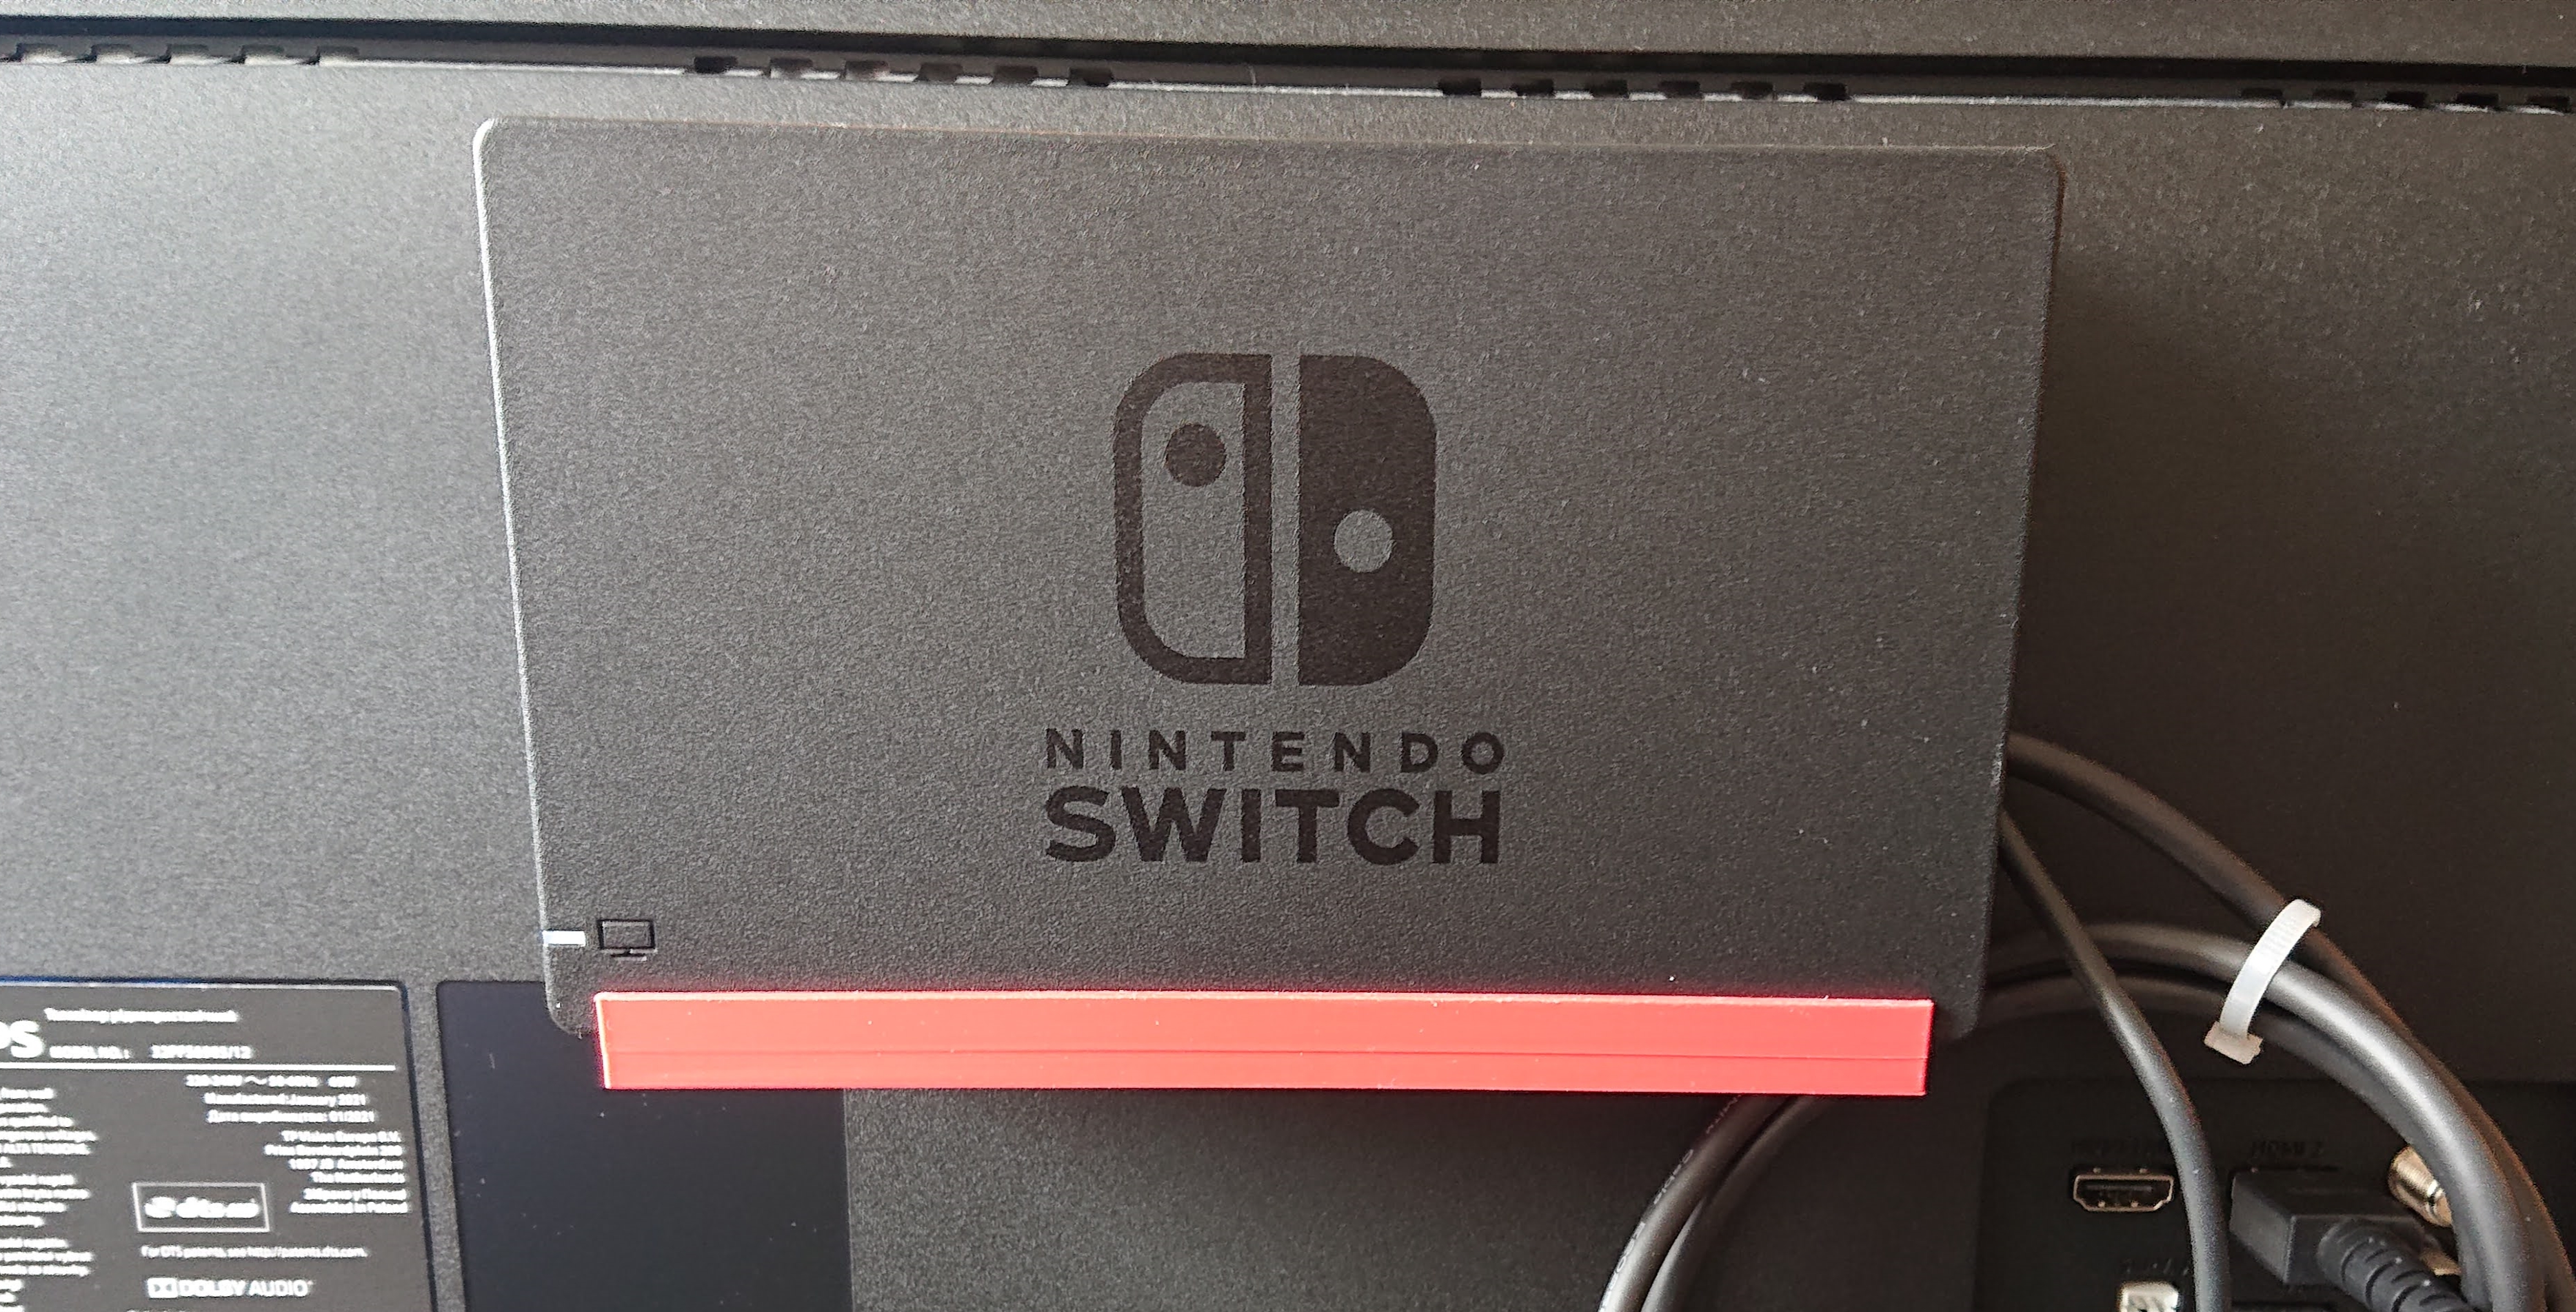 Vesa Mount for Nintendo Switch Dock